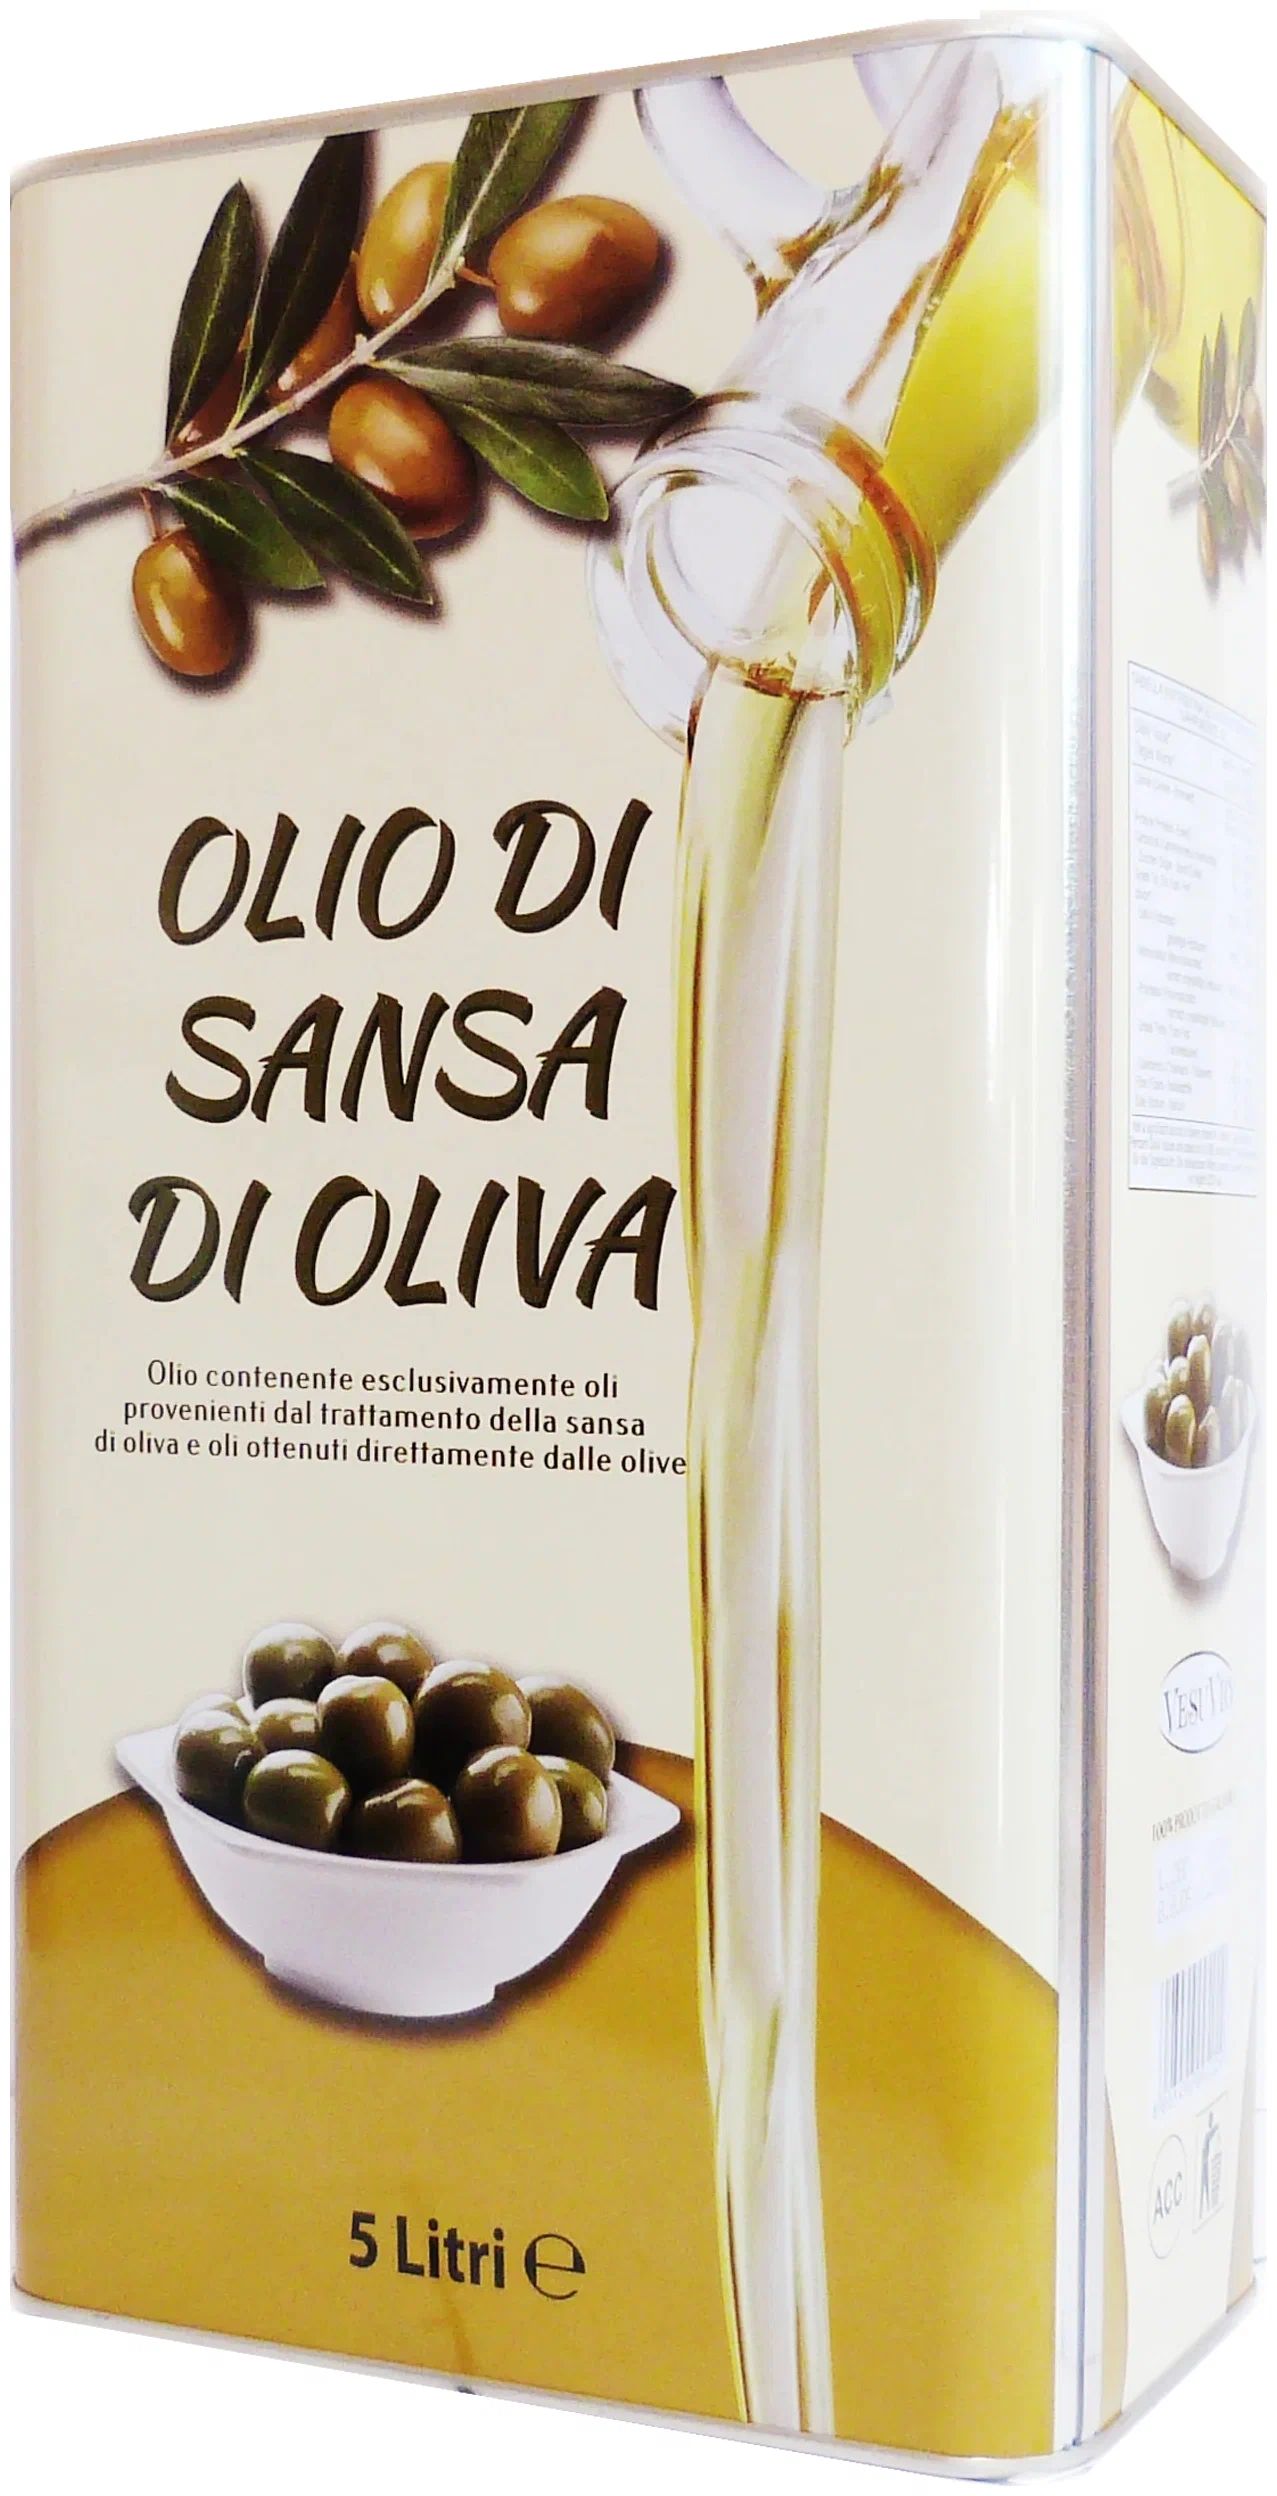 Оливковое масло для жарки Olio di sansa di oliva 5 л  ( Италия )